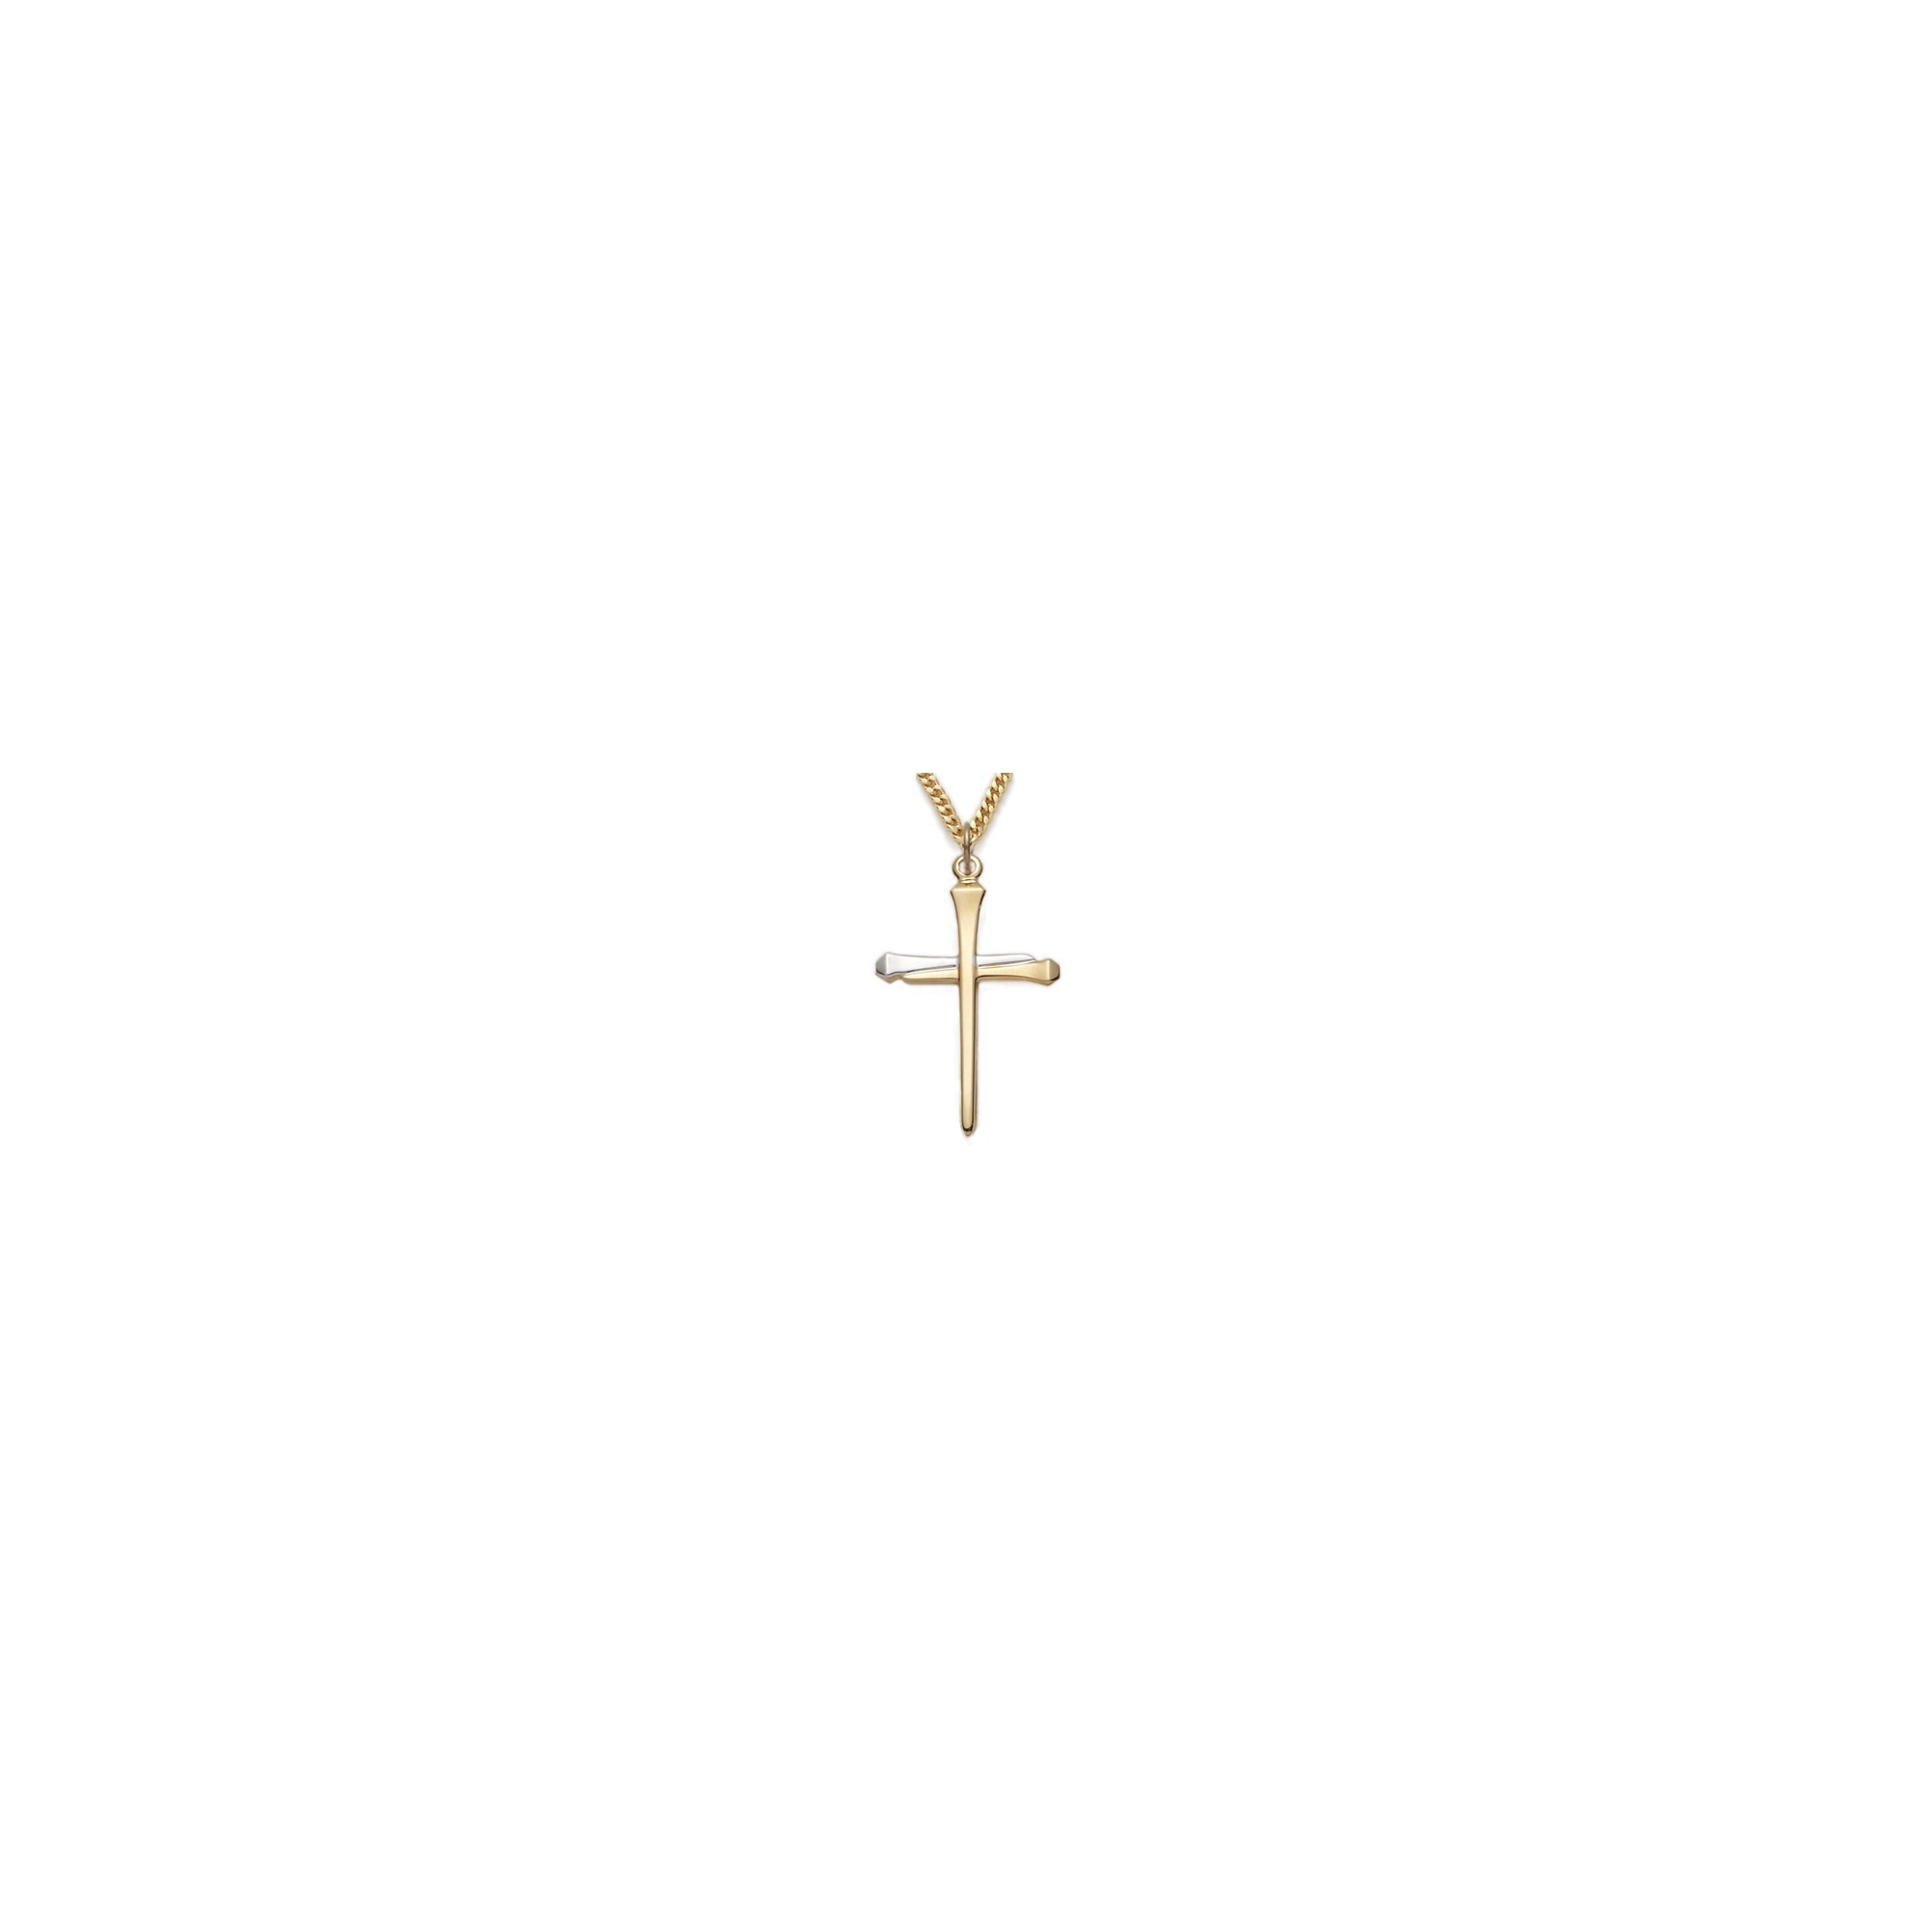 Two Tone Nail Cross Necklace | The Catholic Company®